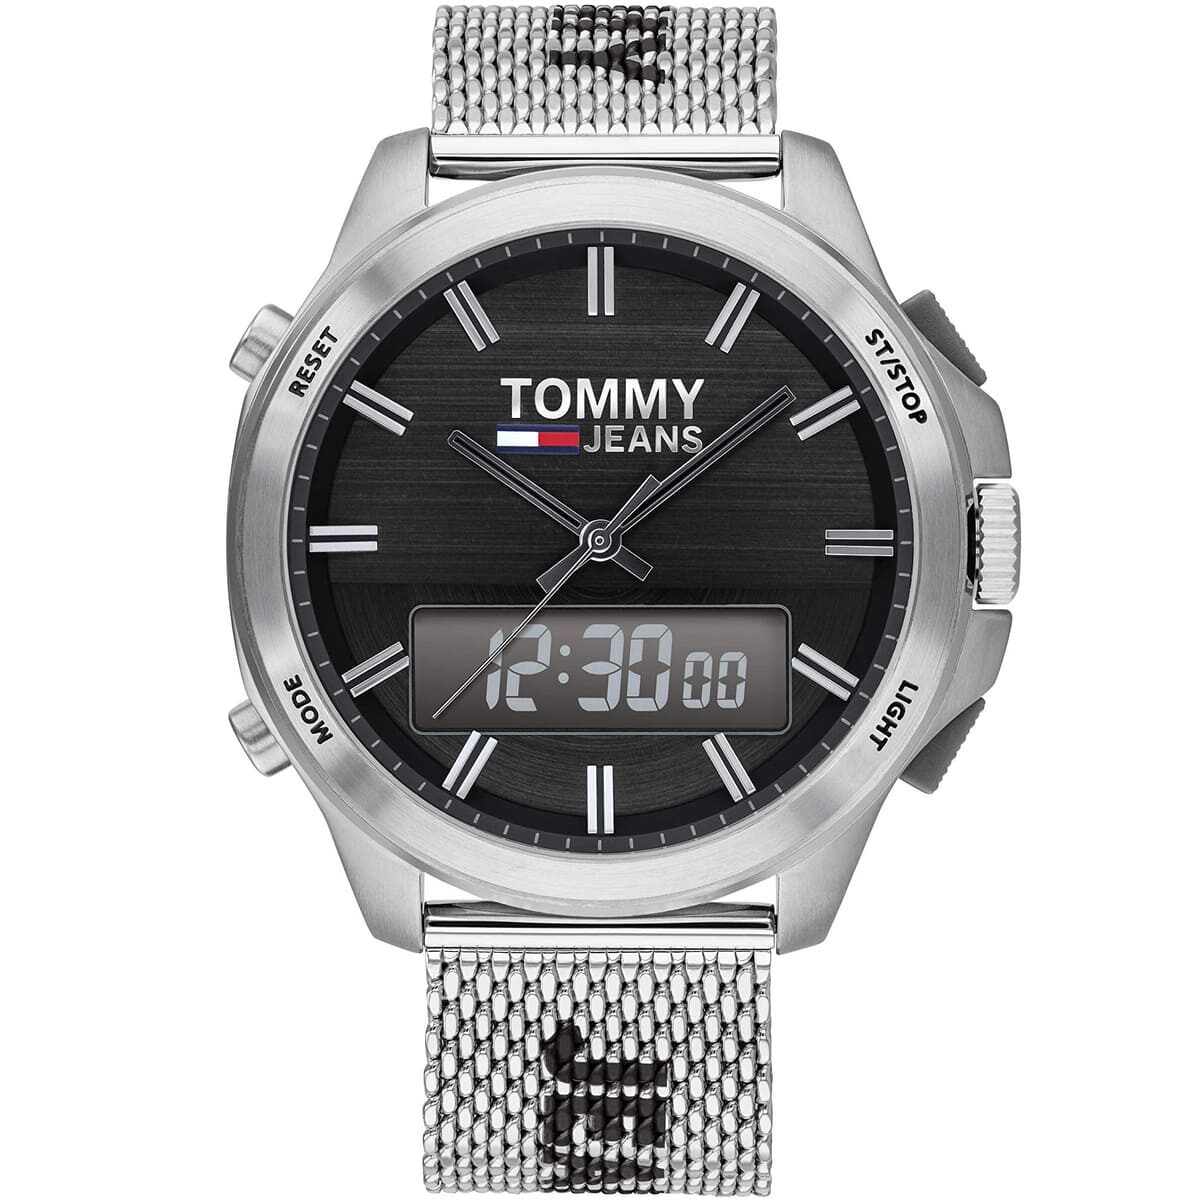 1791765-tommy-hilfiger-watch-men-black-dial-stainless-steel-metal-silver-mesh-strap-quartz-digital-analog-dual-time-jeans